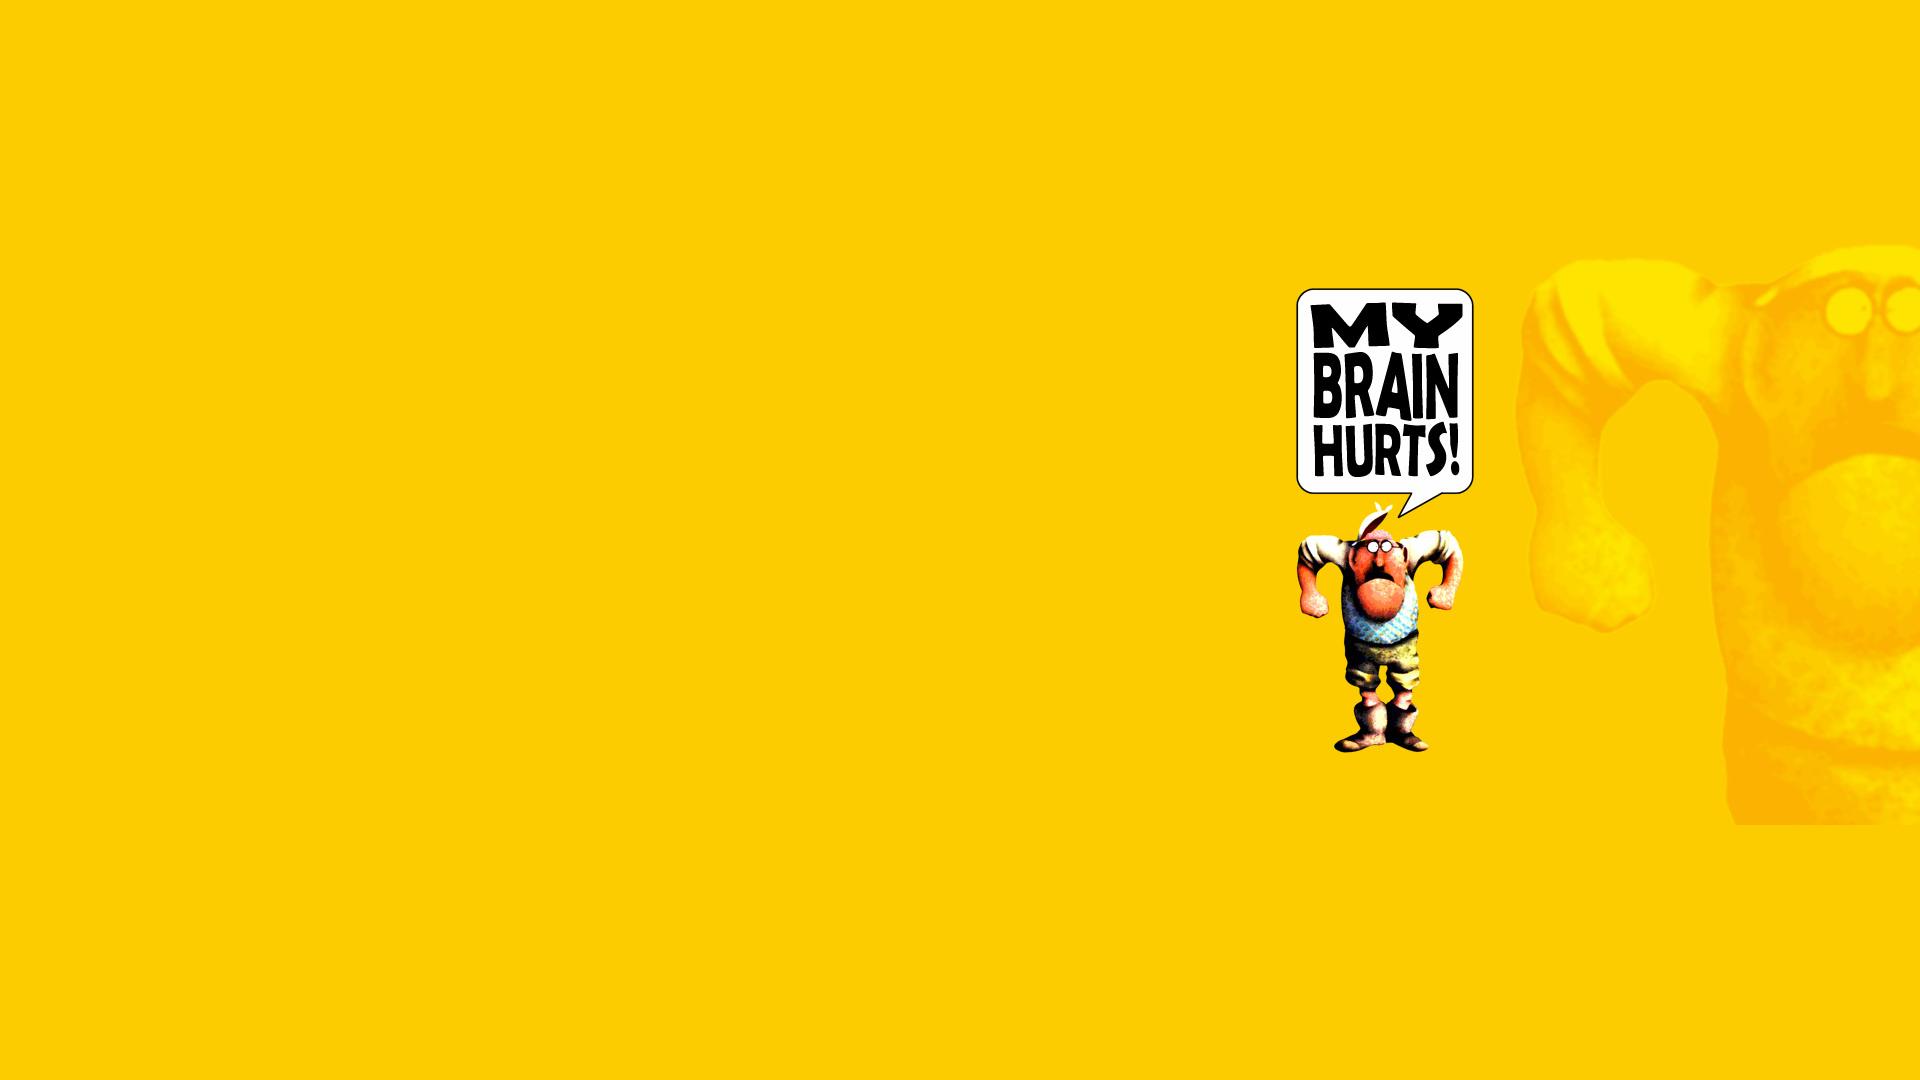 Monty Python Yellow cartoon humor movies text wallpaper 1920x1080